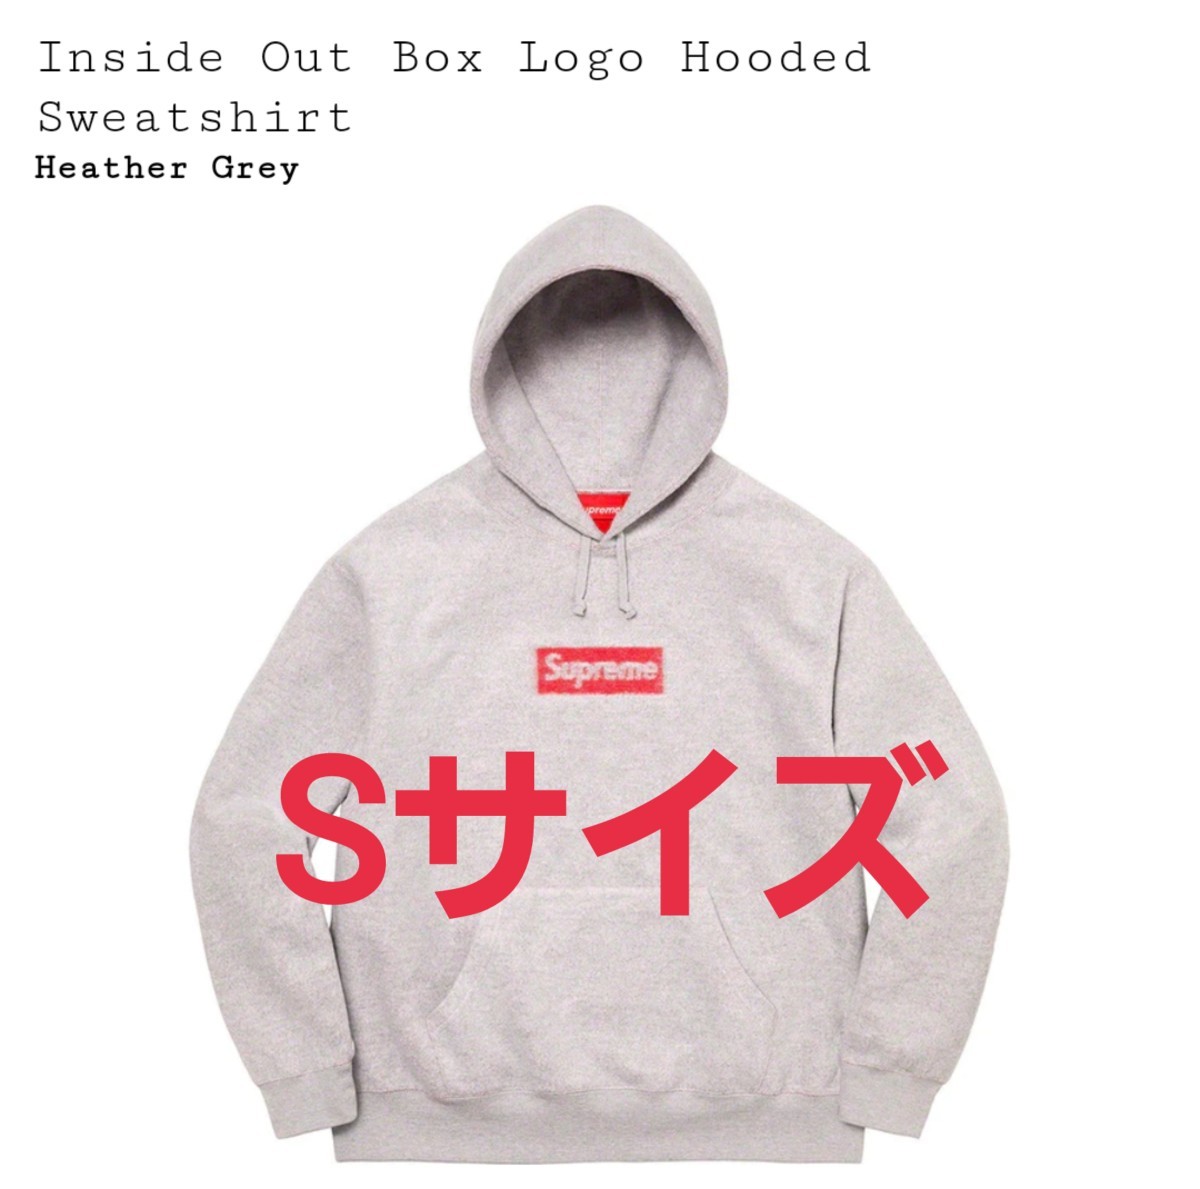 Inside Out Box Logo Hooded Sweatshirt